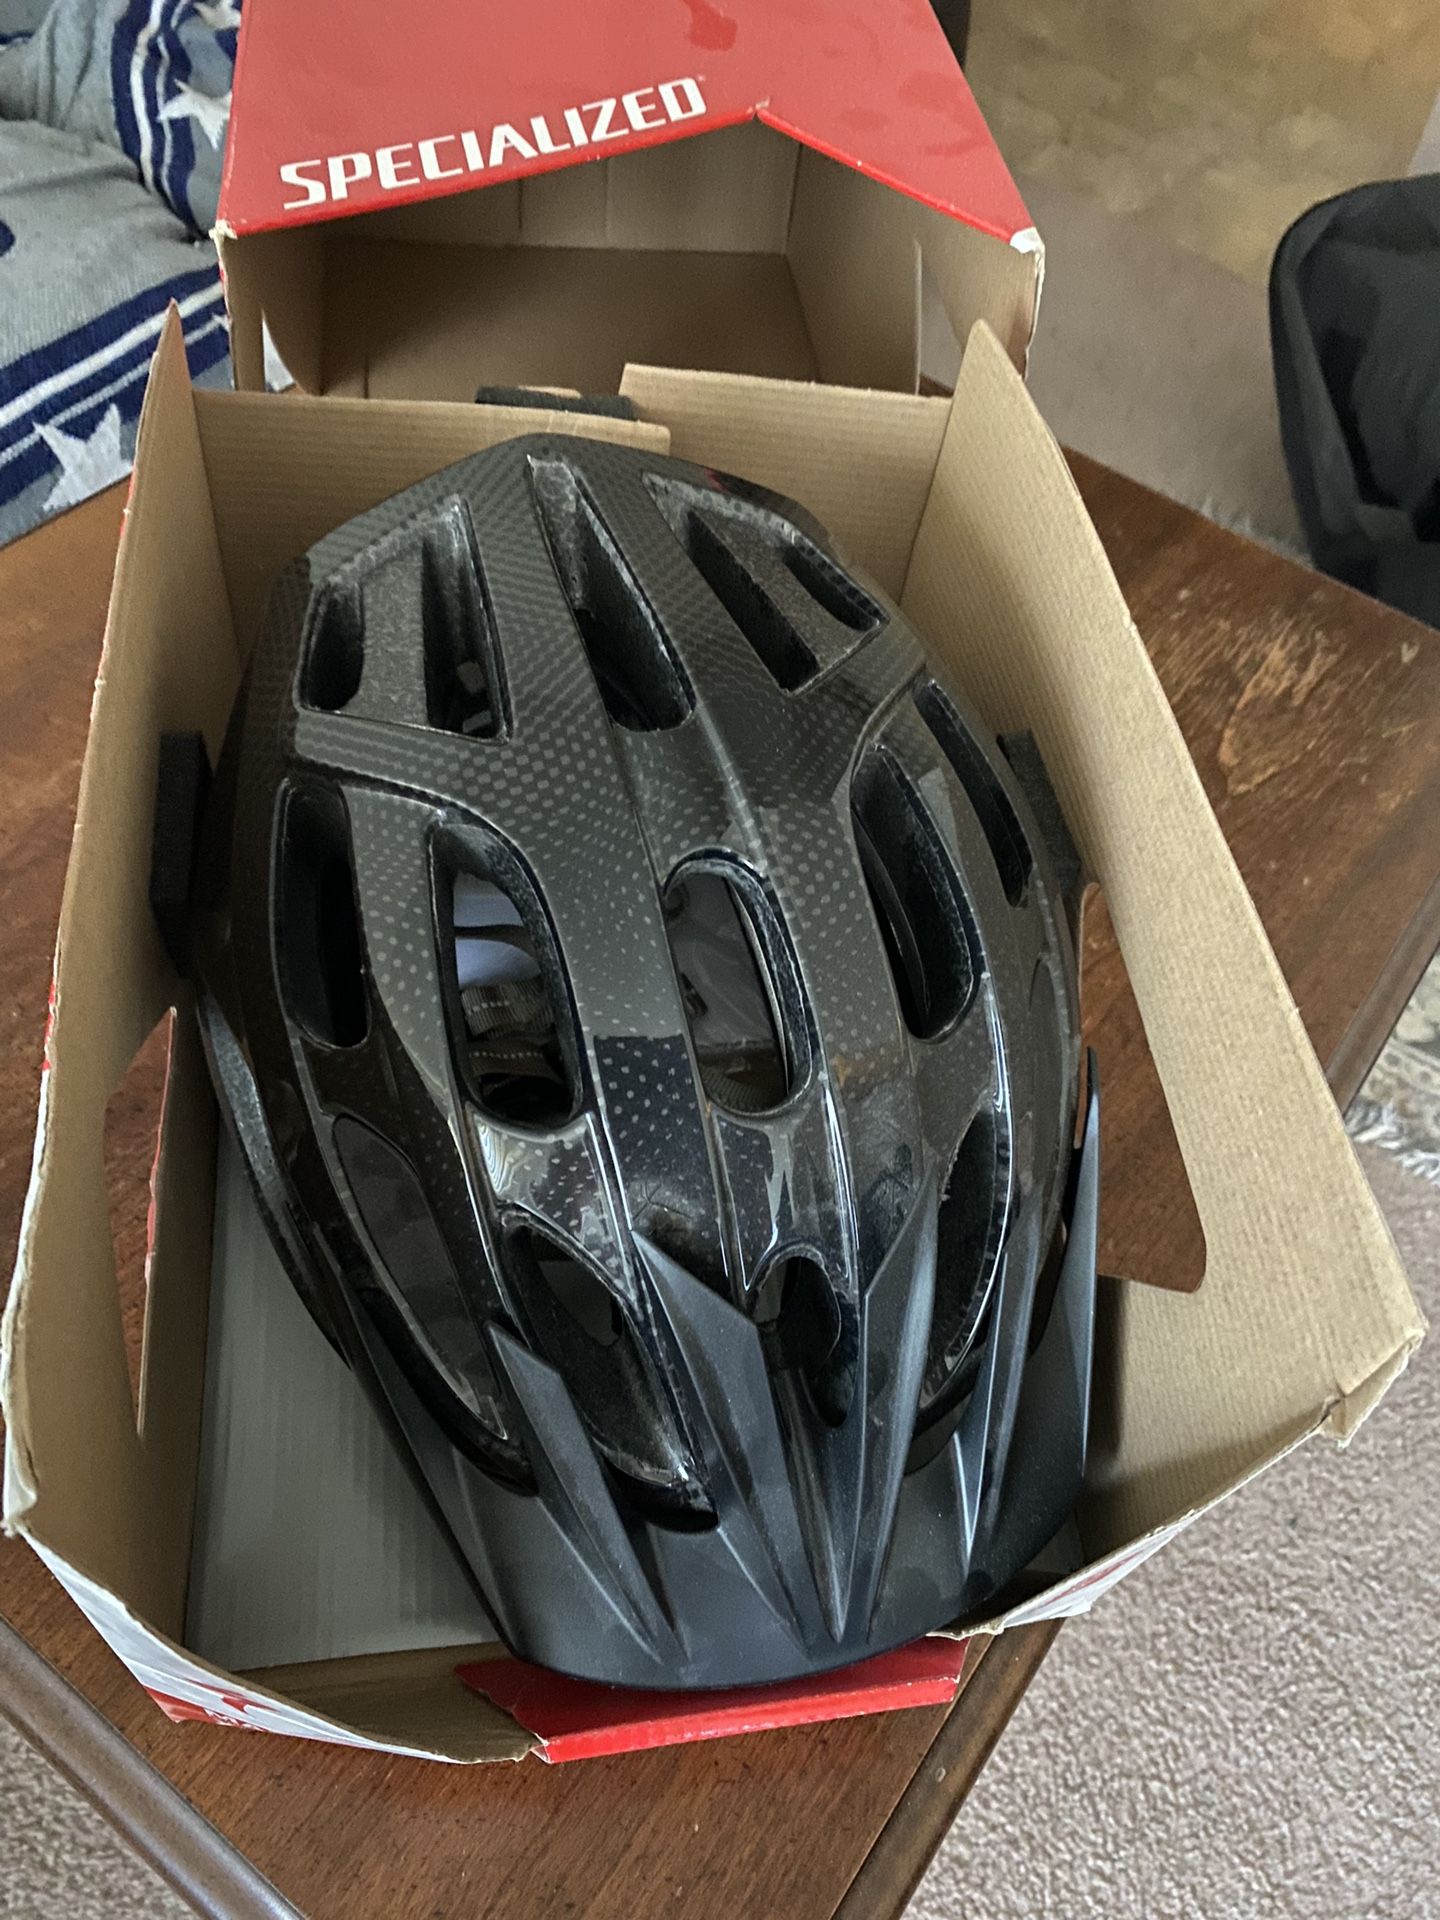 Almost Brand New Bike Helmet